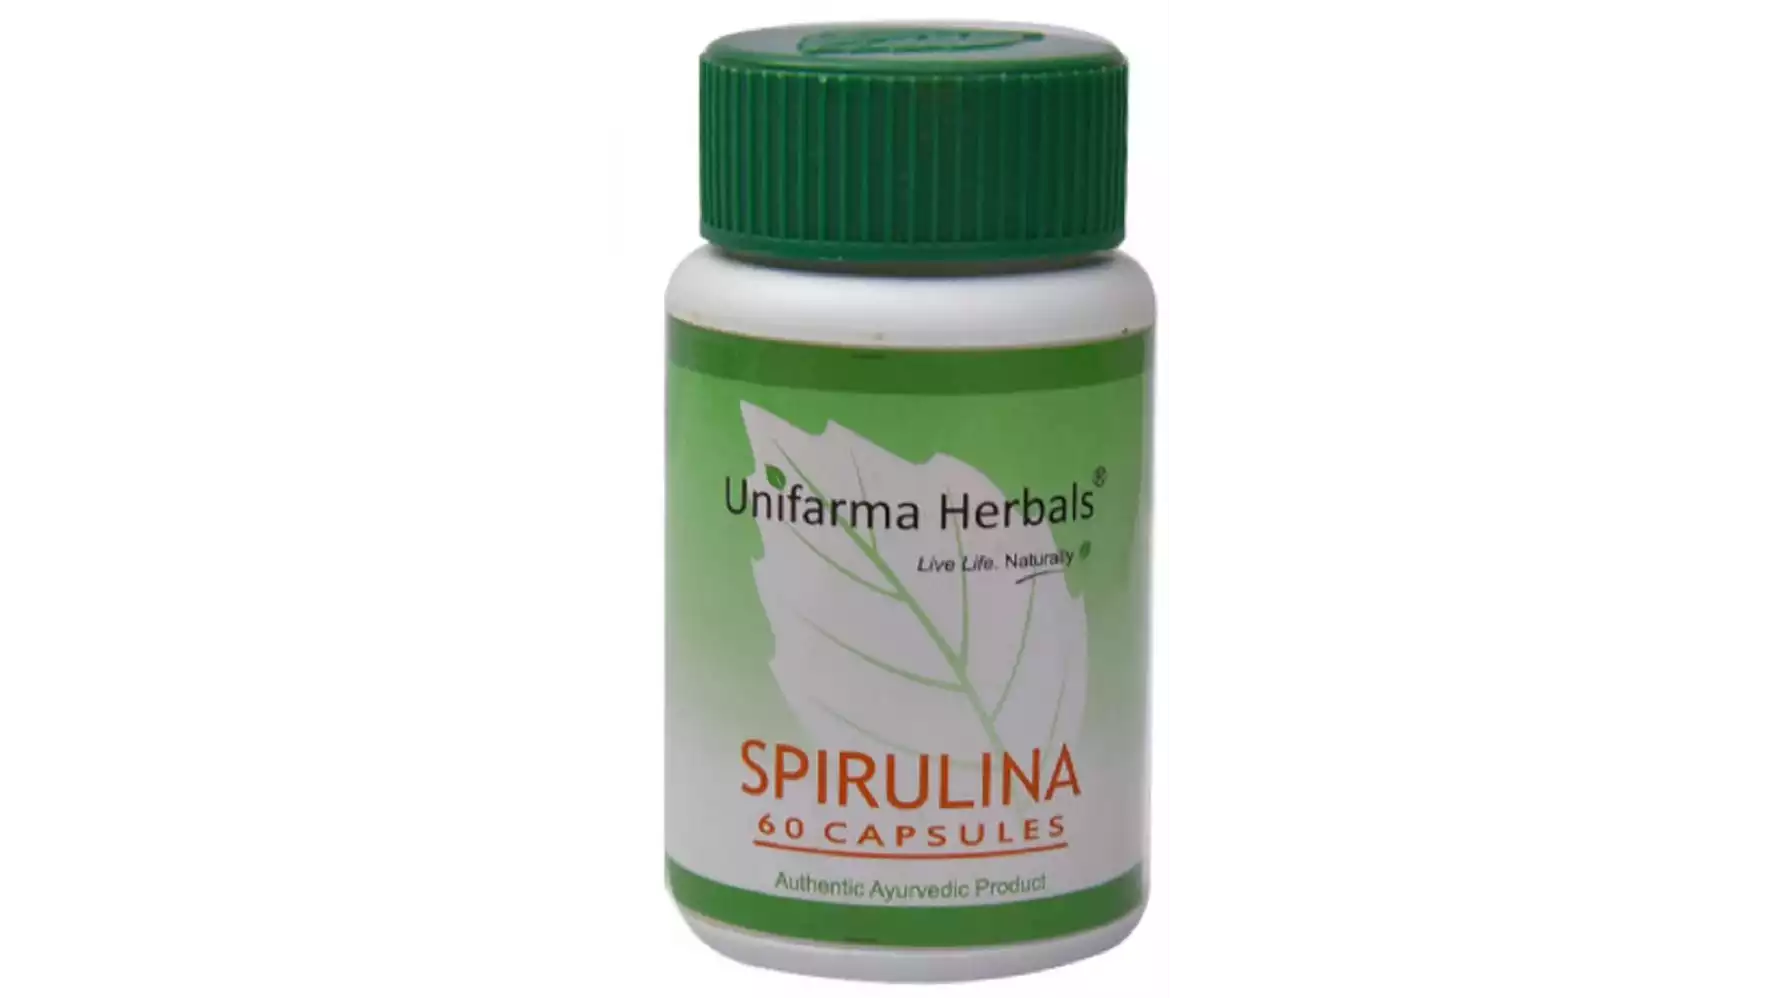 Unifarma Herbals Spirulina (60caps)